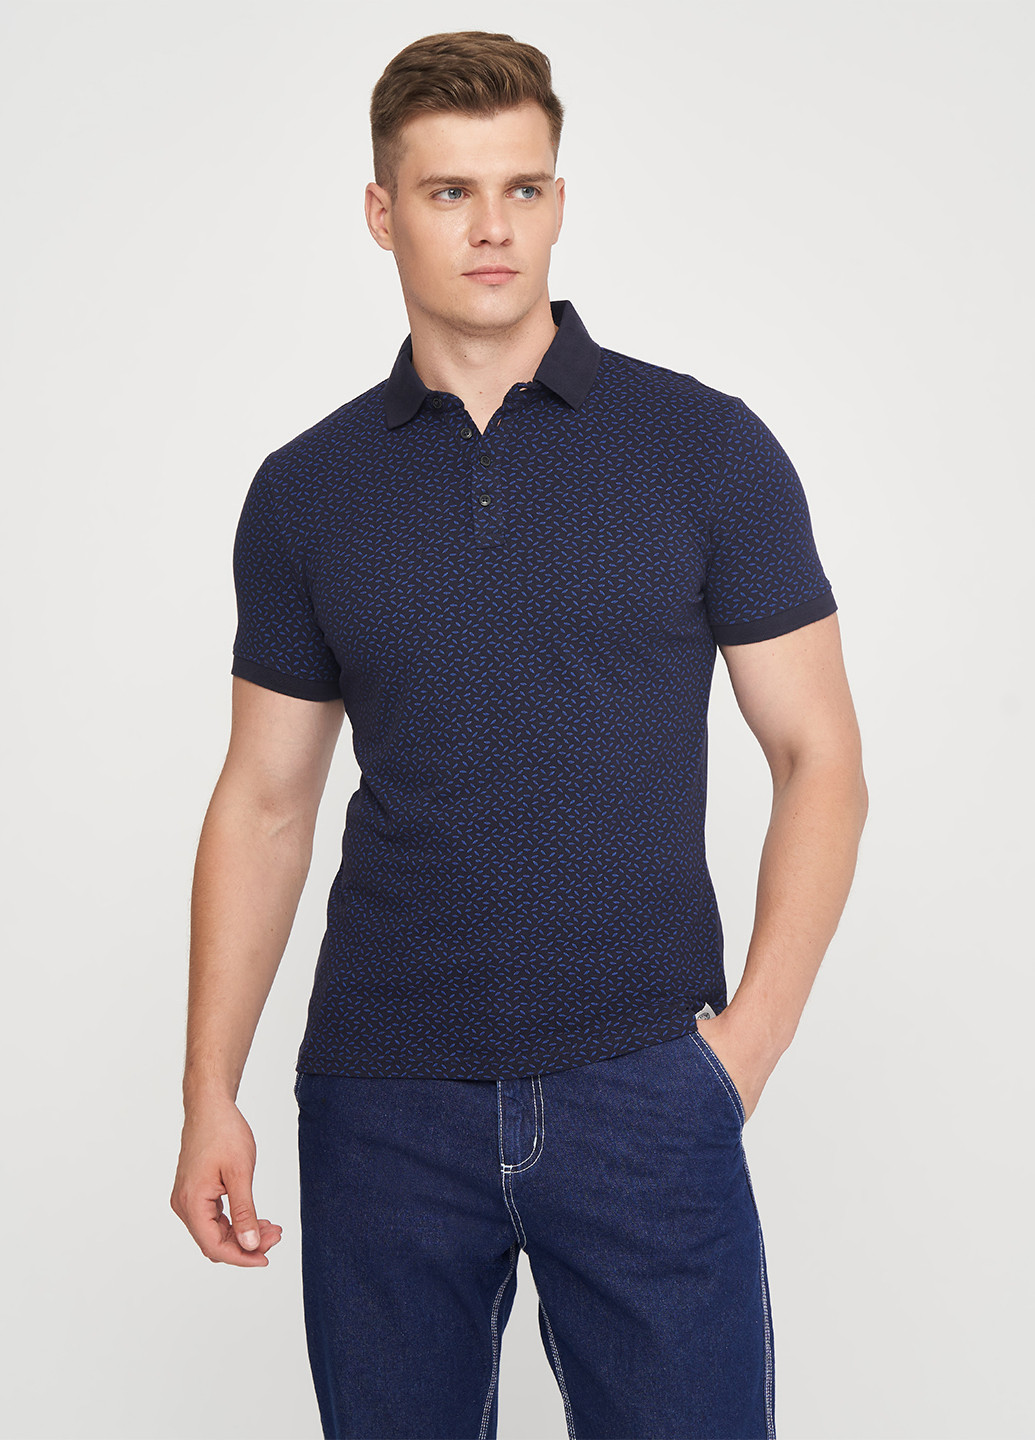 Темно-синяя футболка-поло для мужчин Tom Tailor с геометрическим узором